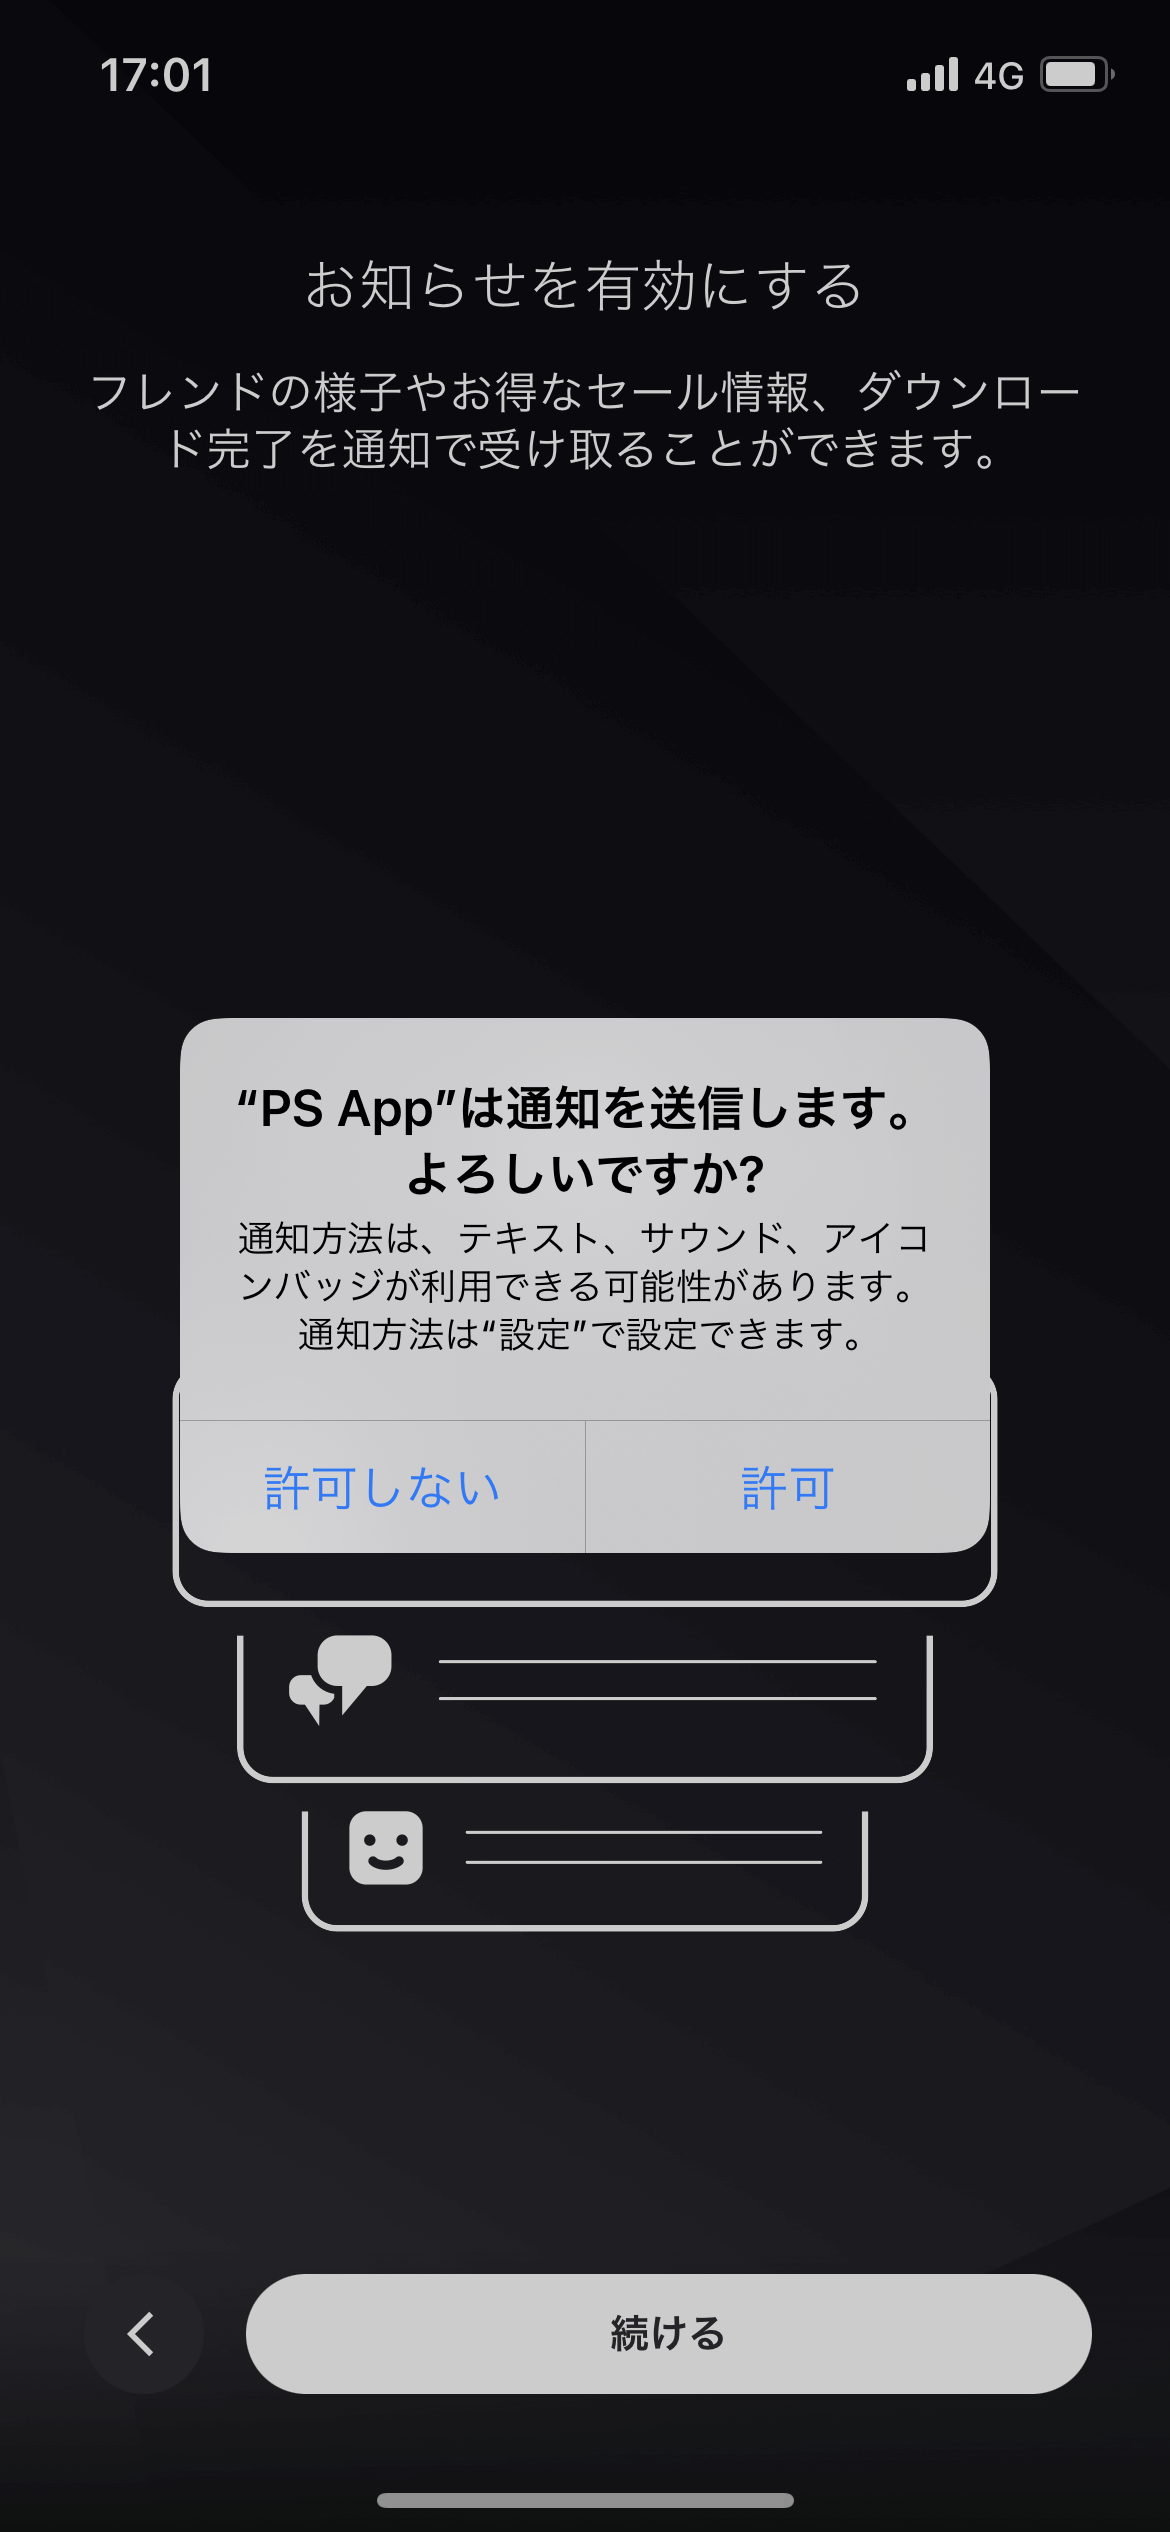 PS App オンボーディング screen